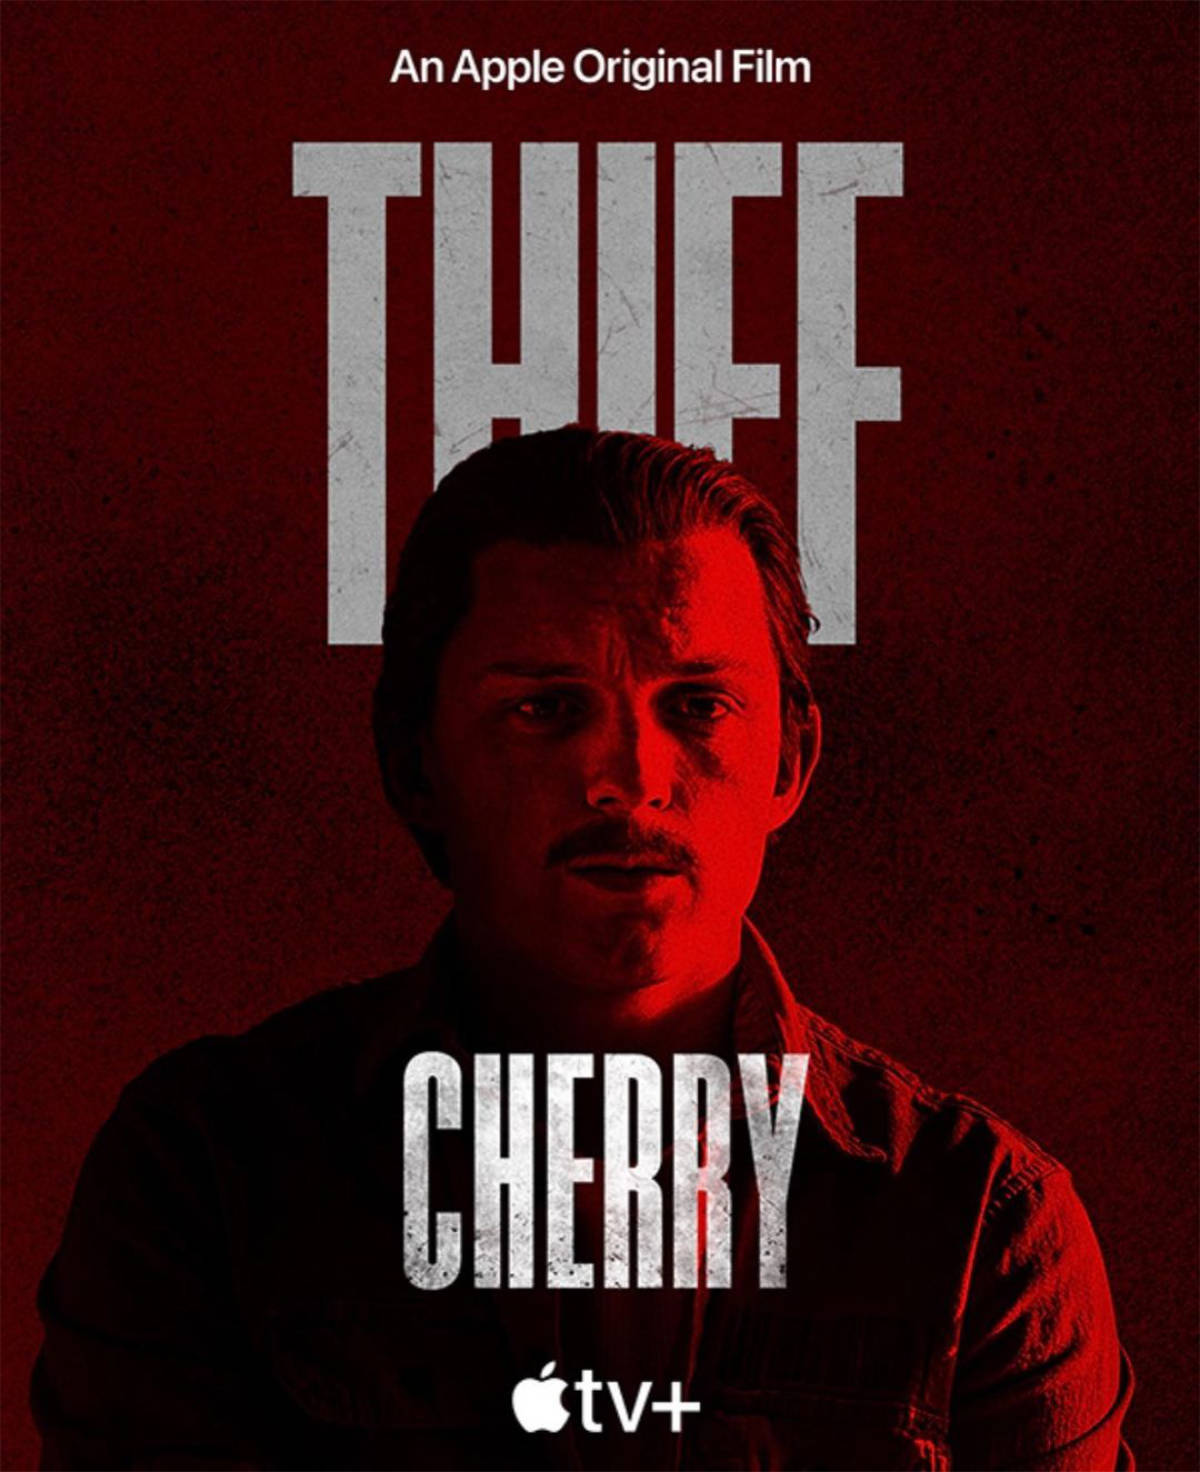 Cherry Movie 2020 Wallpapers